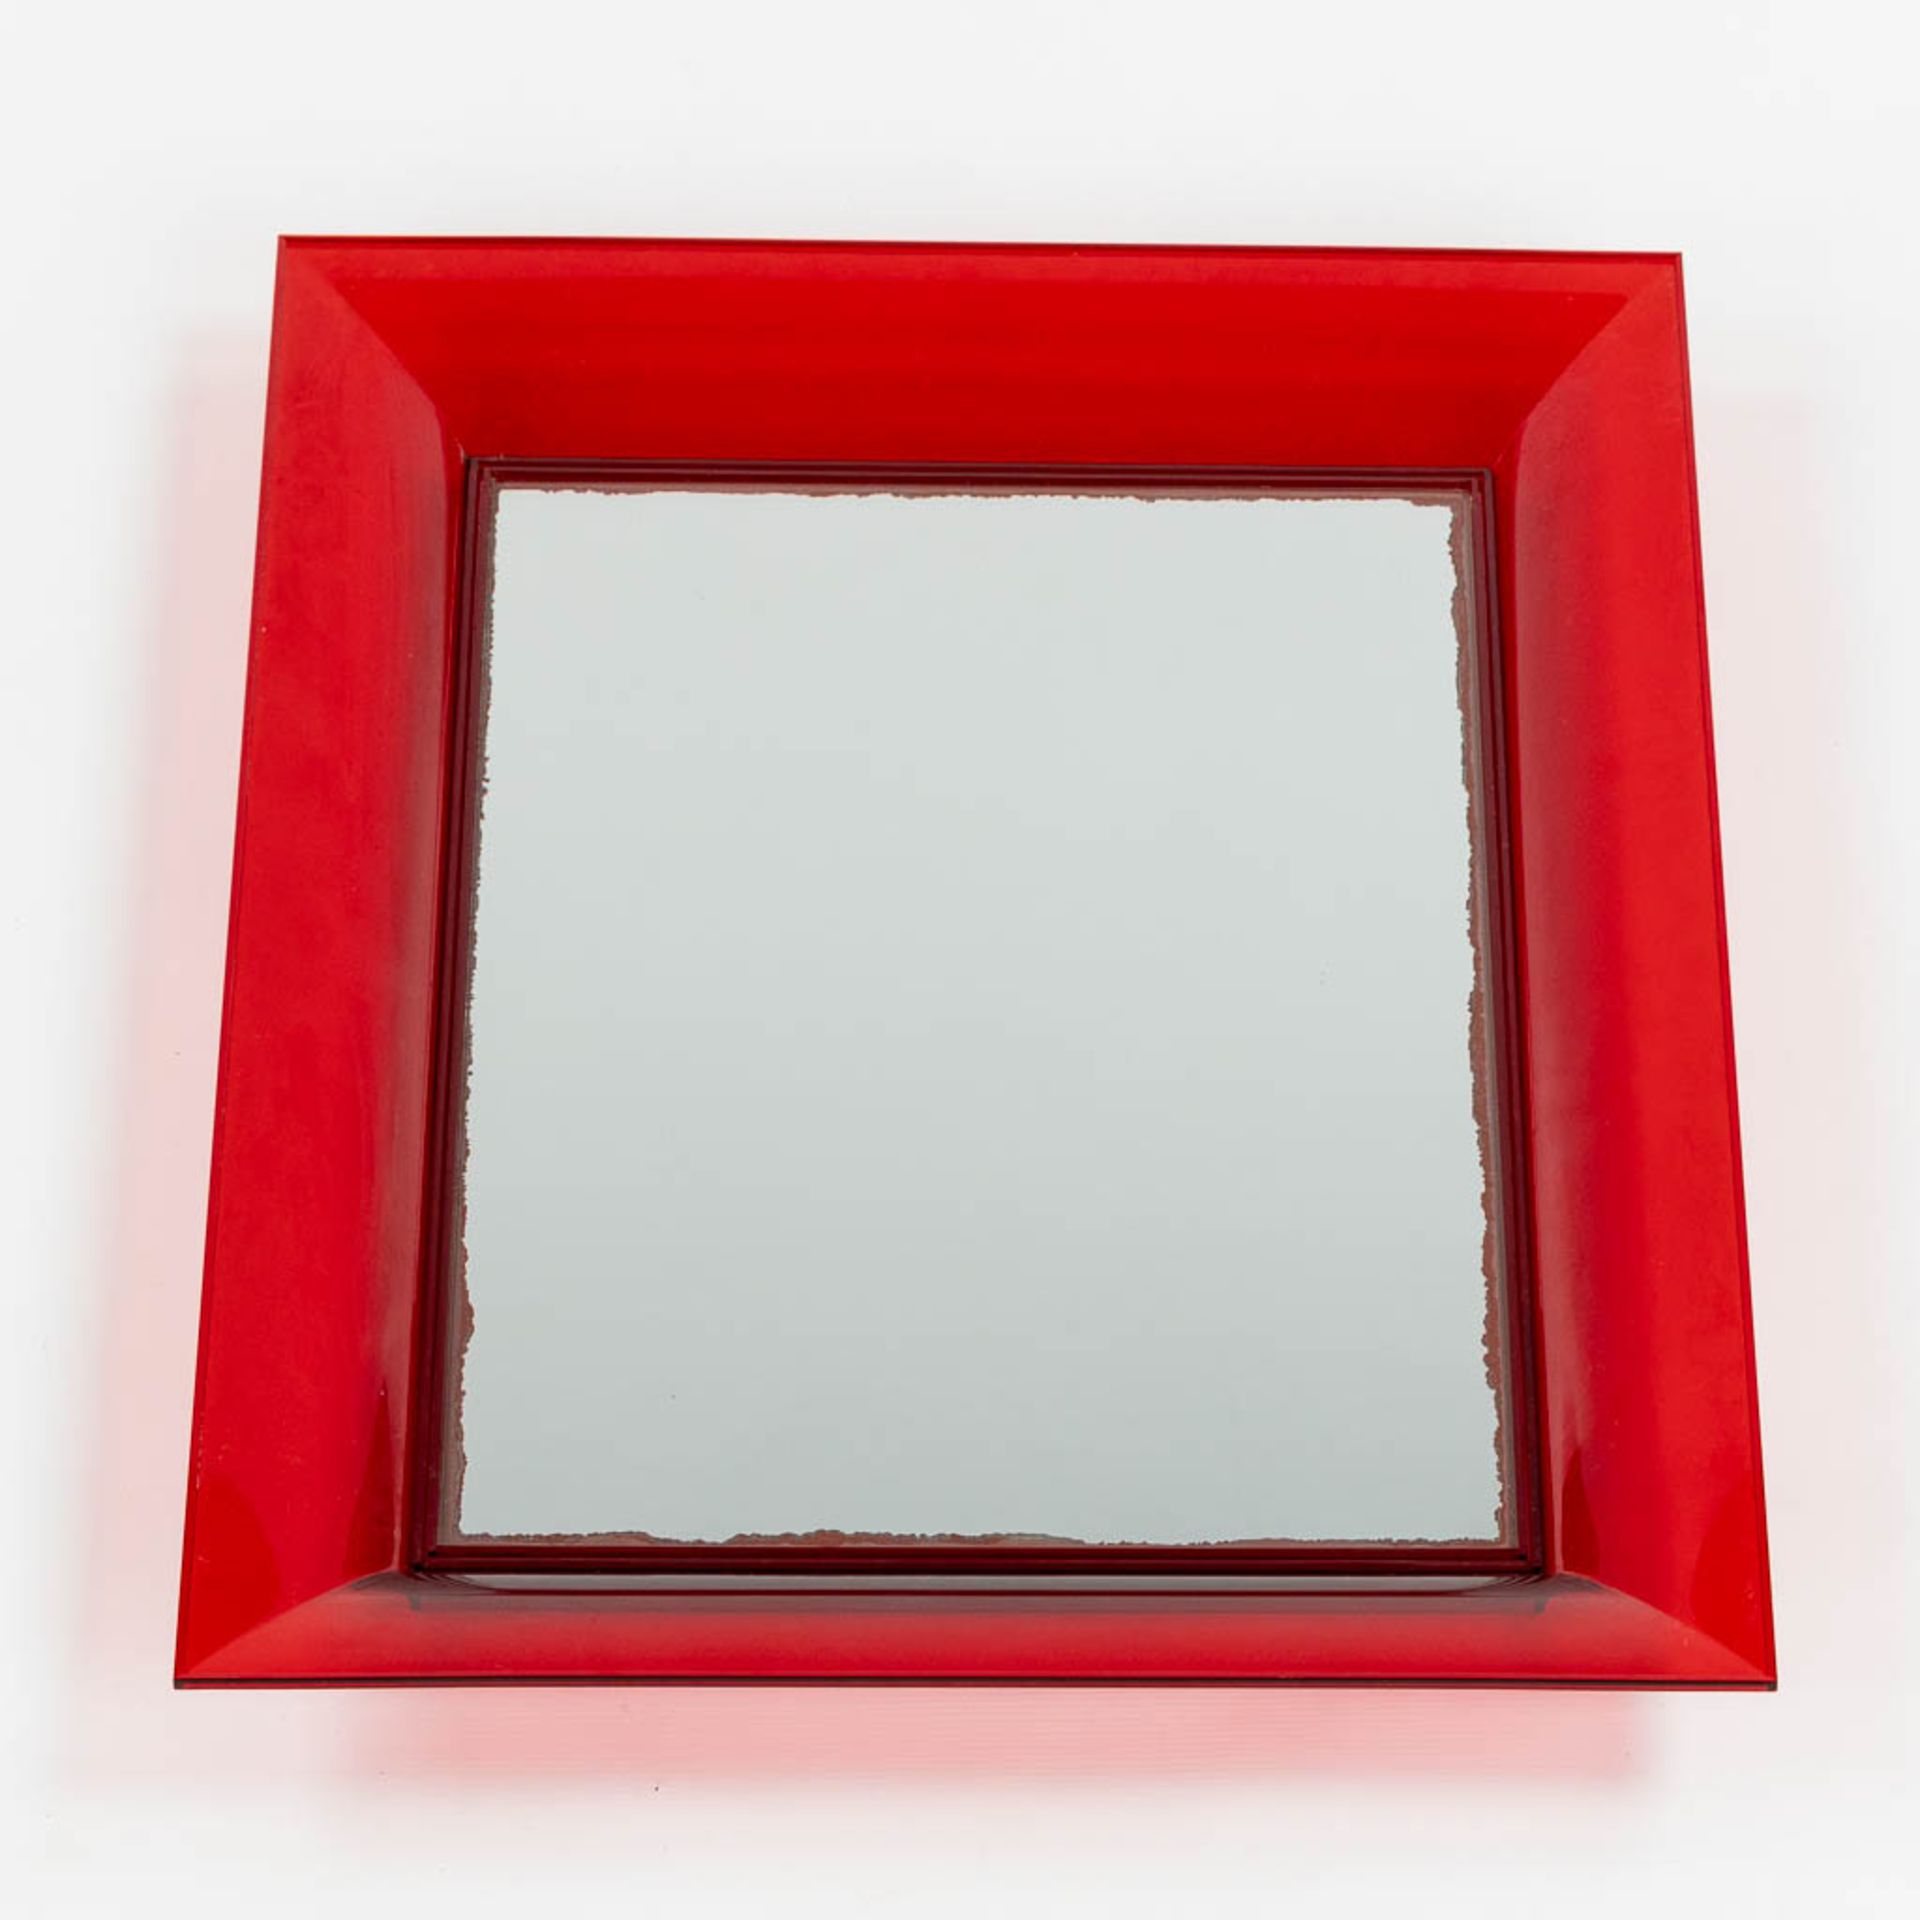 Philippe STARCK &amp; François GHOST (XX) 'Mirror' for Kartell. (W:65 x H:79 cm)